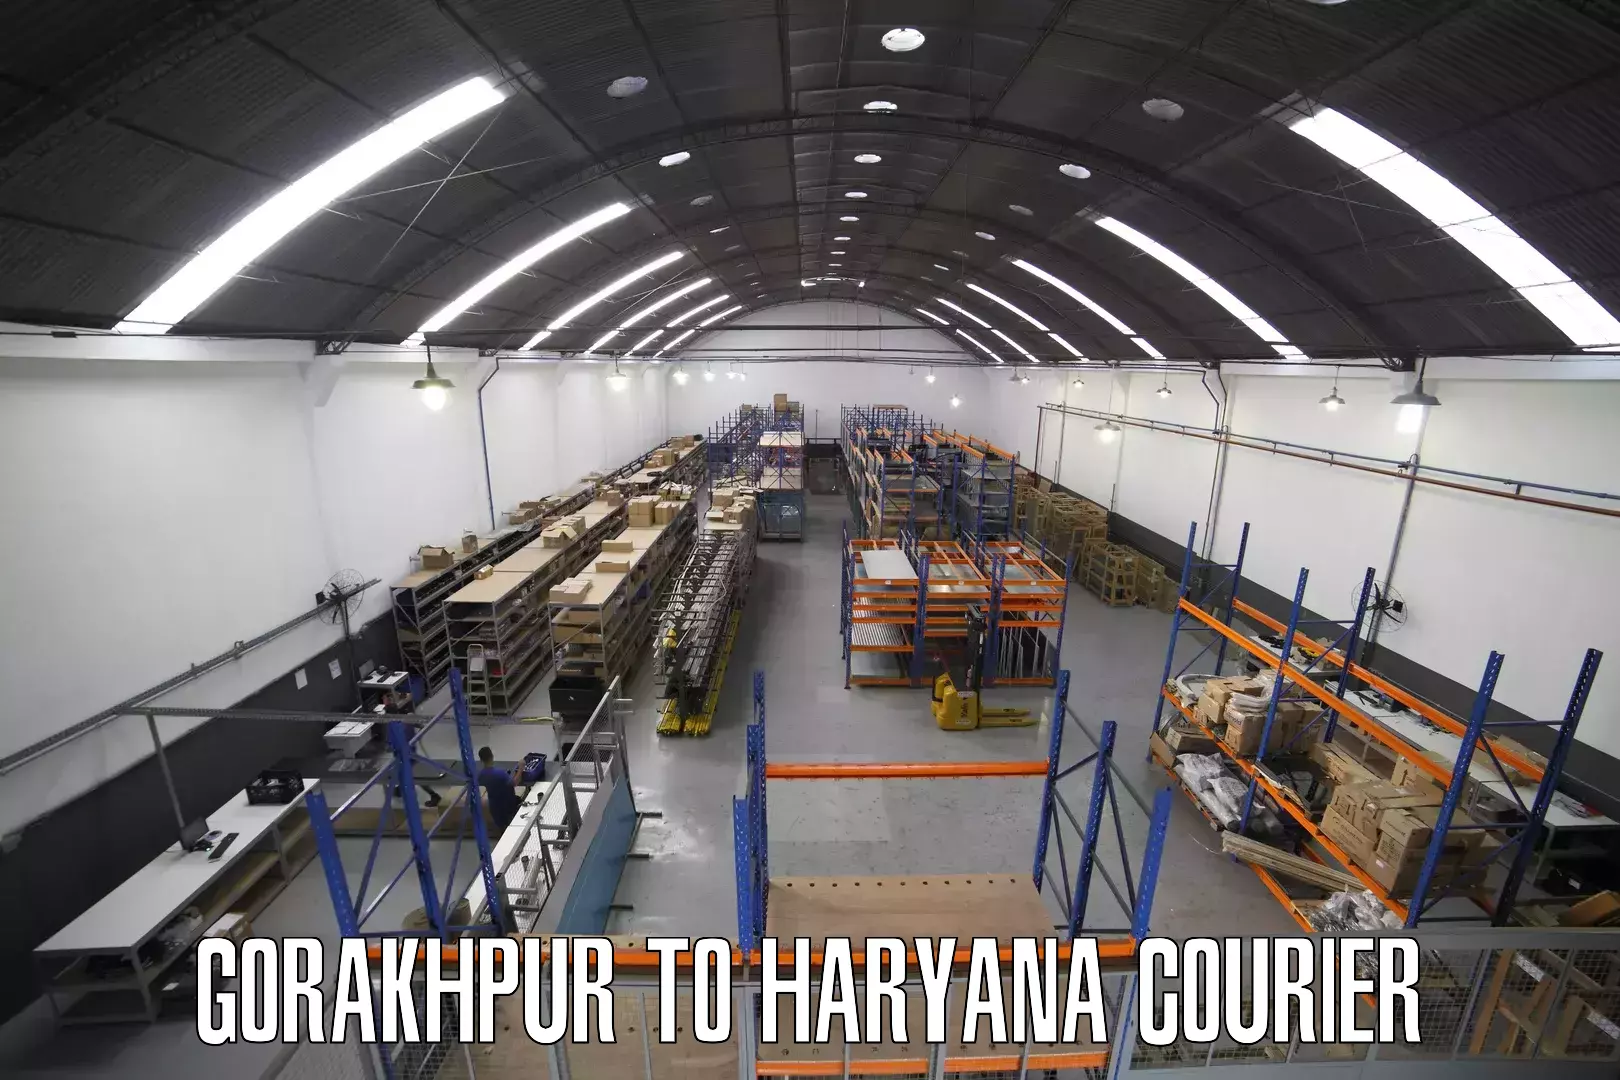 Advanced shipping technology Gorakhpur to Faridabad